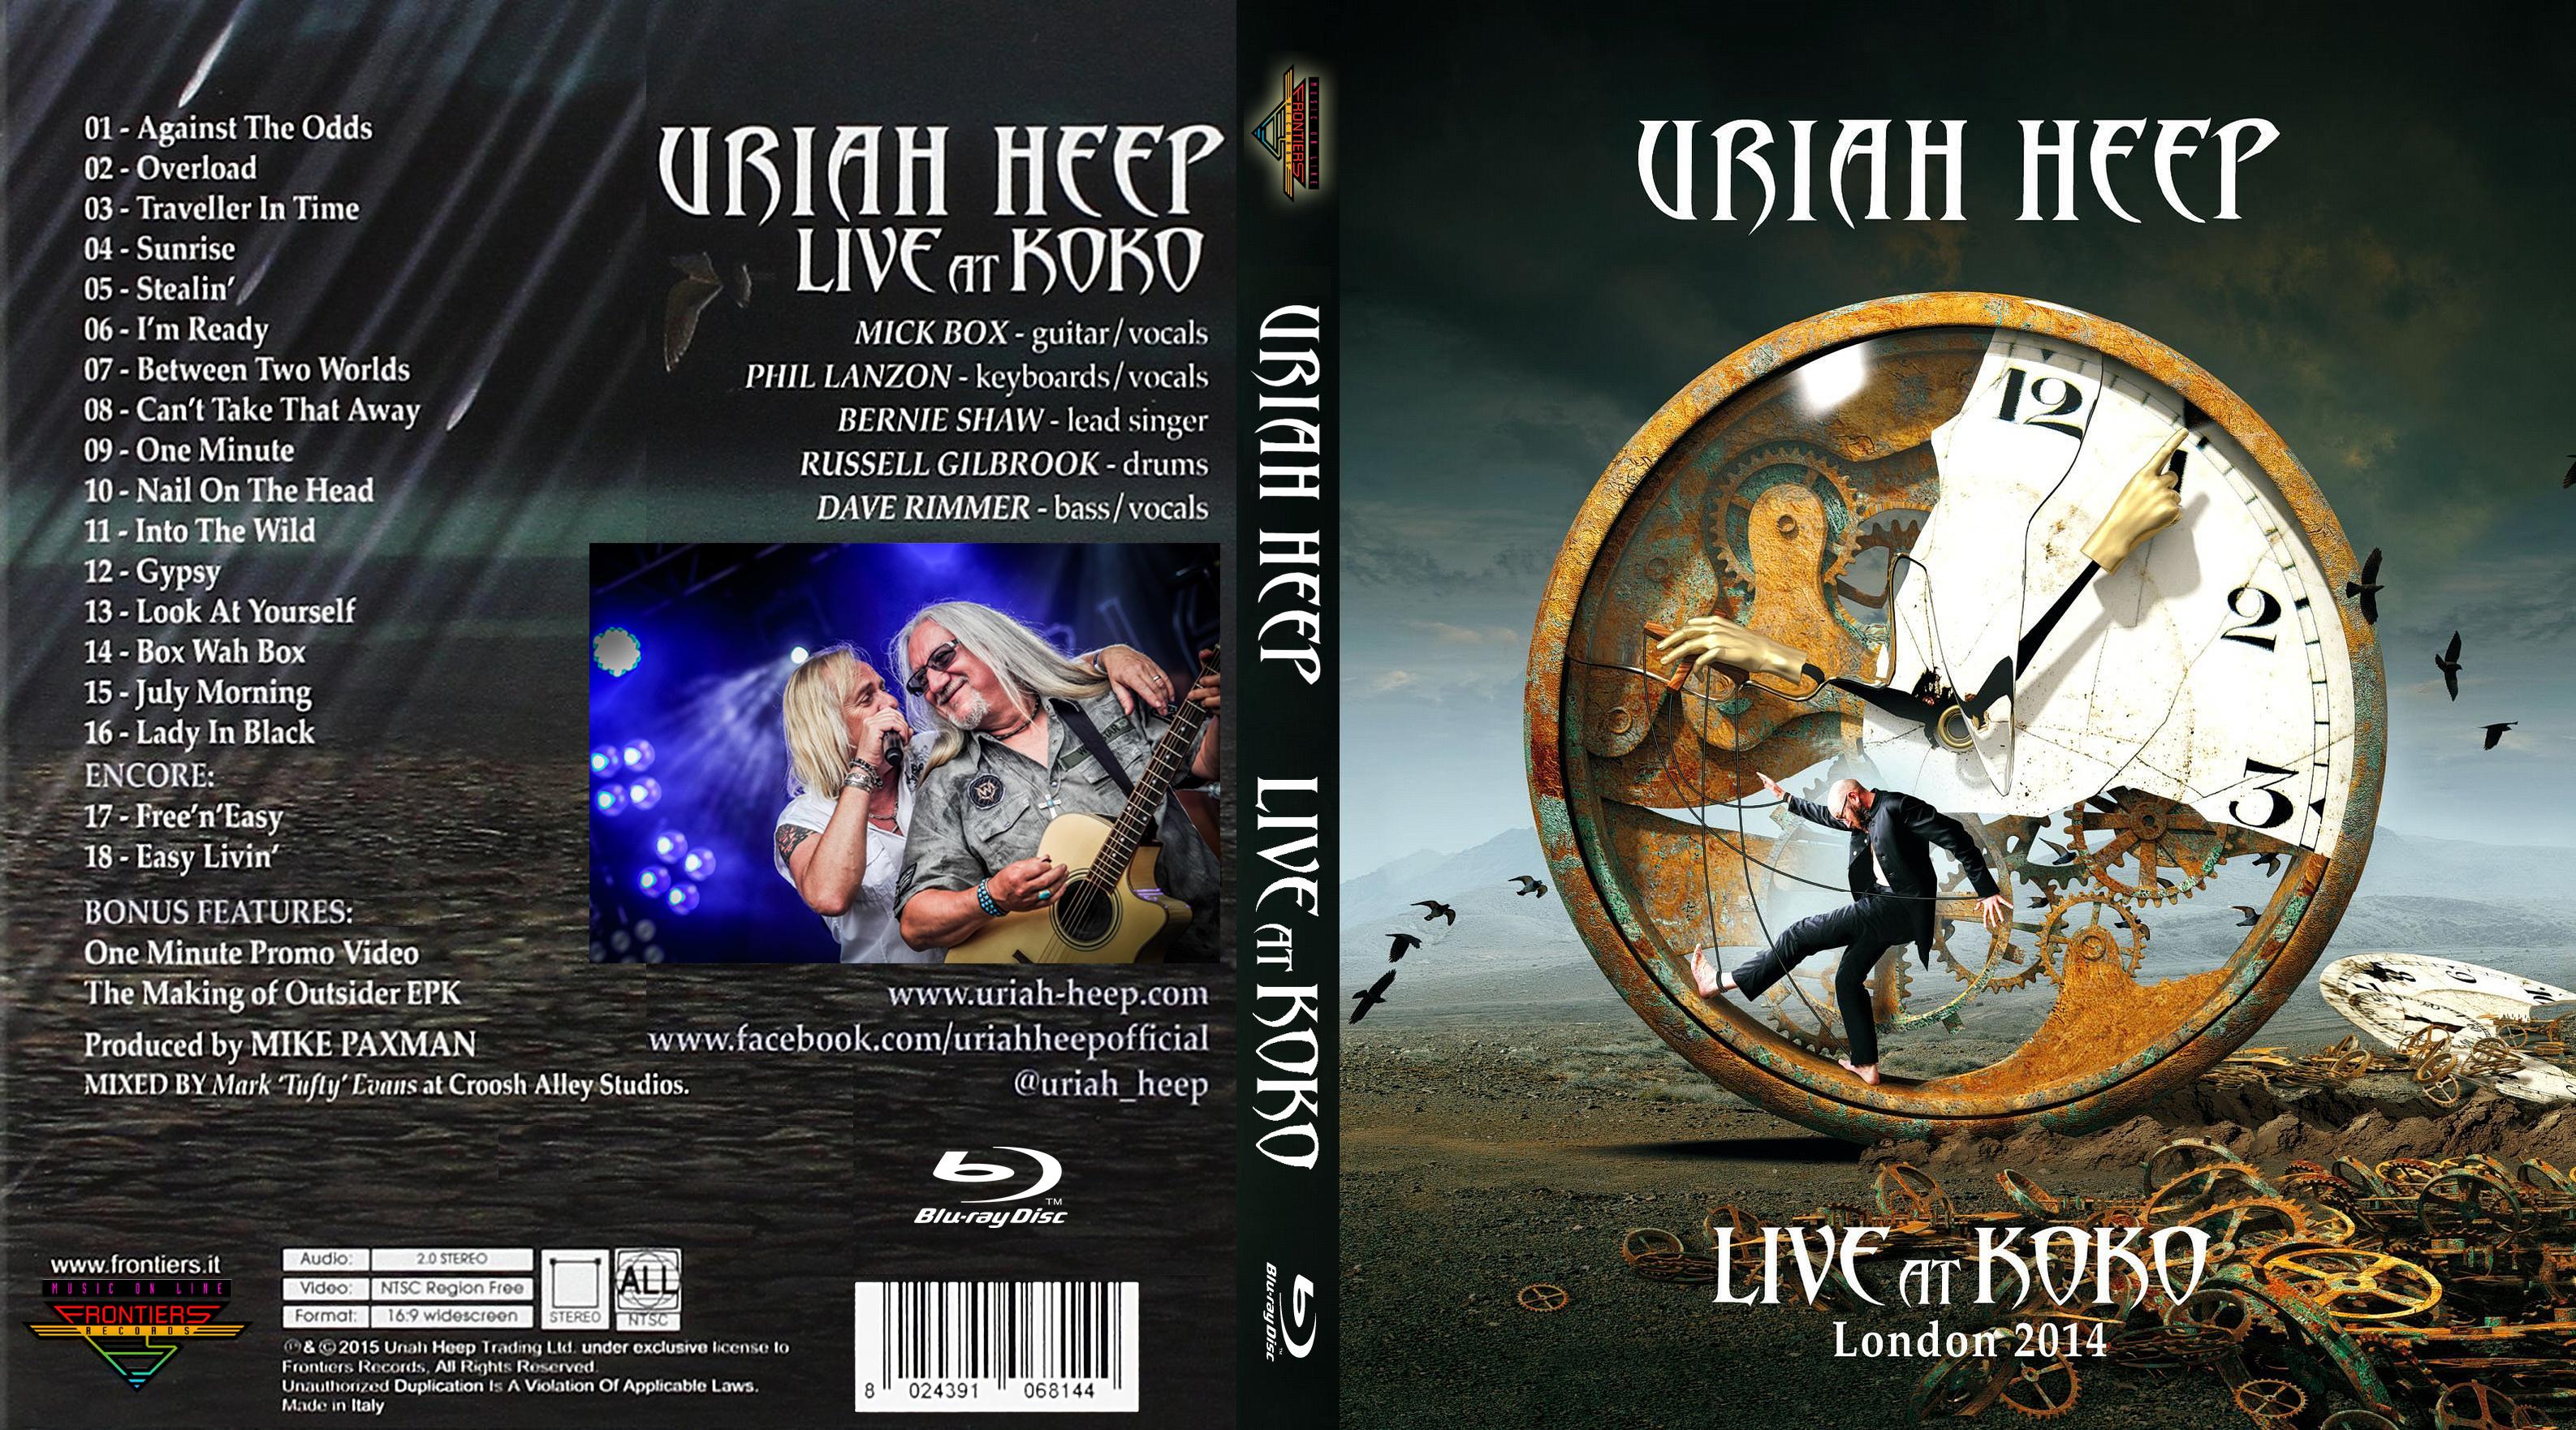 Uriah Heep Live at koko London 2014 Blu-ray